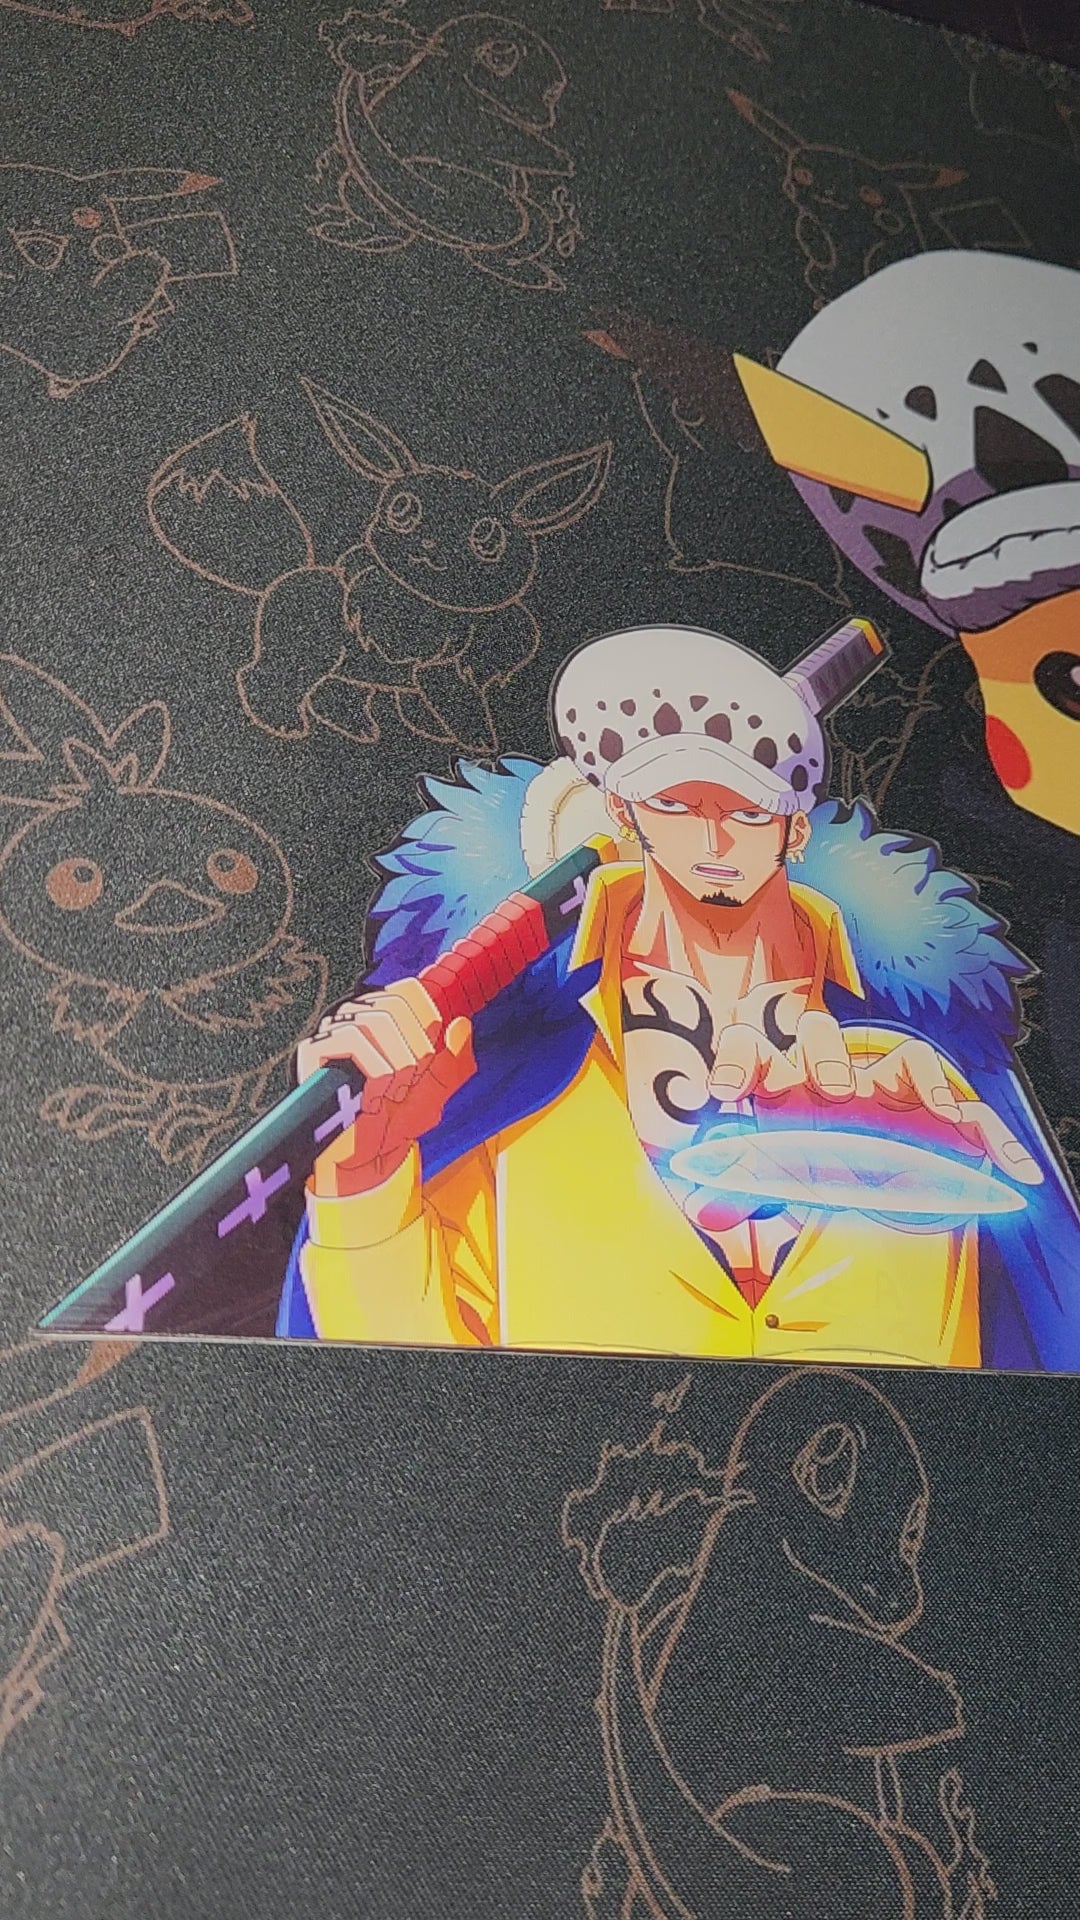 One Piece - Luffy & Law - Sticker